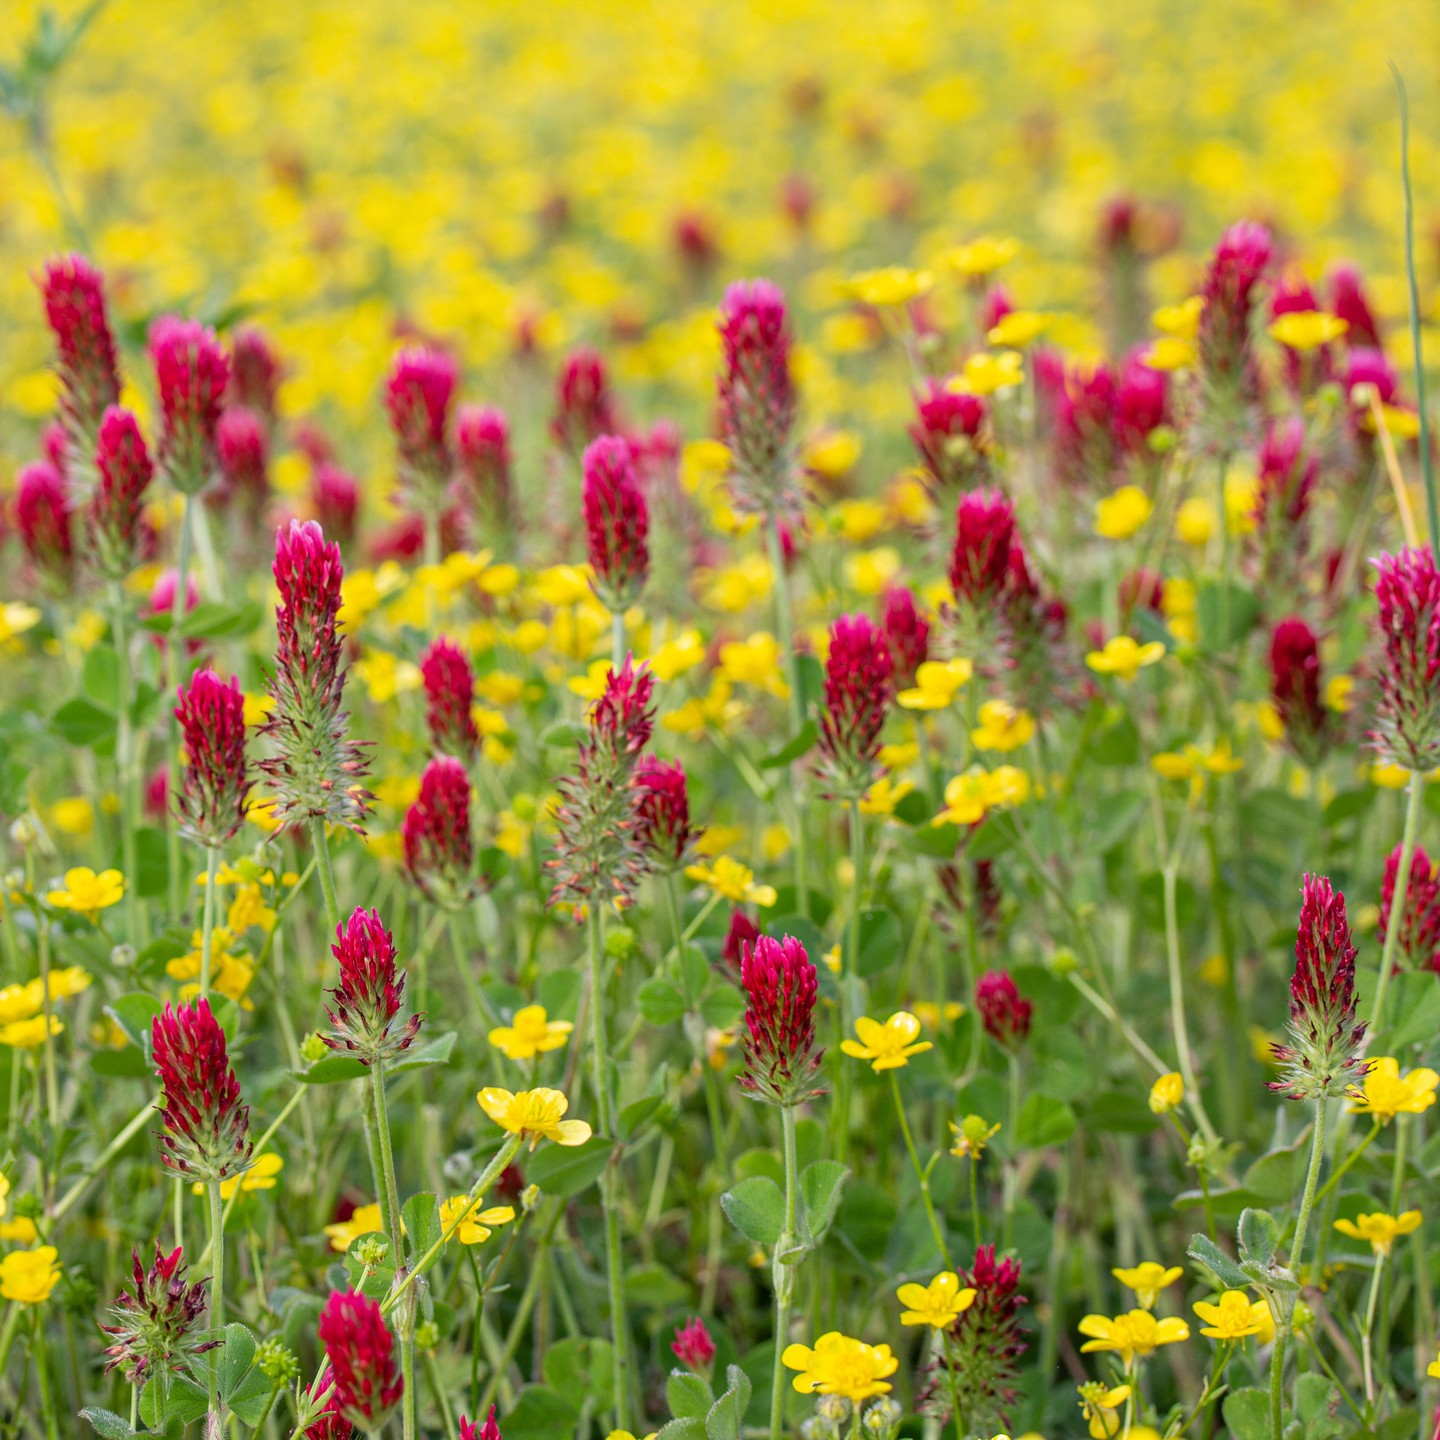 A field of crimson clover and buttercups. 

#spring #flowers #wildflowers #crimsonclover #buttercup #flowersofinstagram #flowerstagram #outdoors #nature #Tennessee #springintennessee #natureisbeautiful